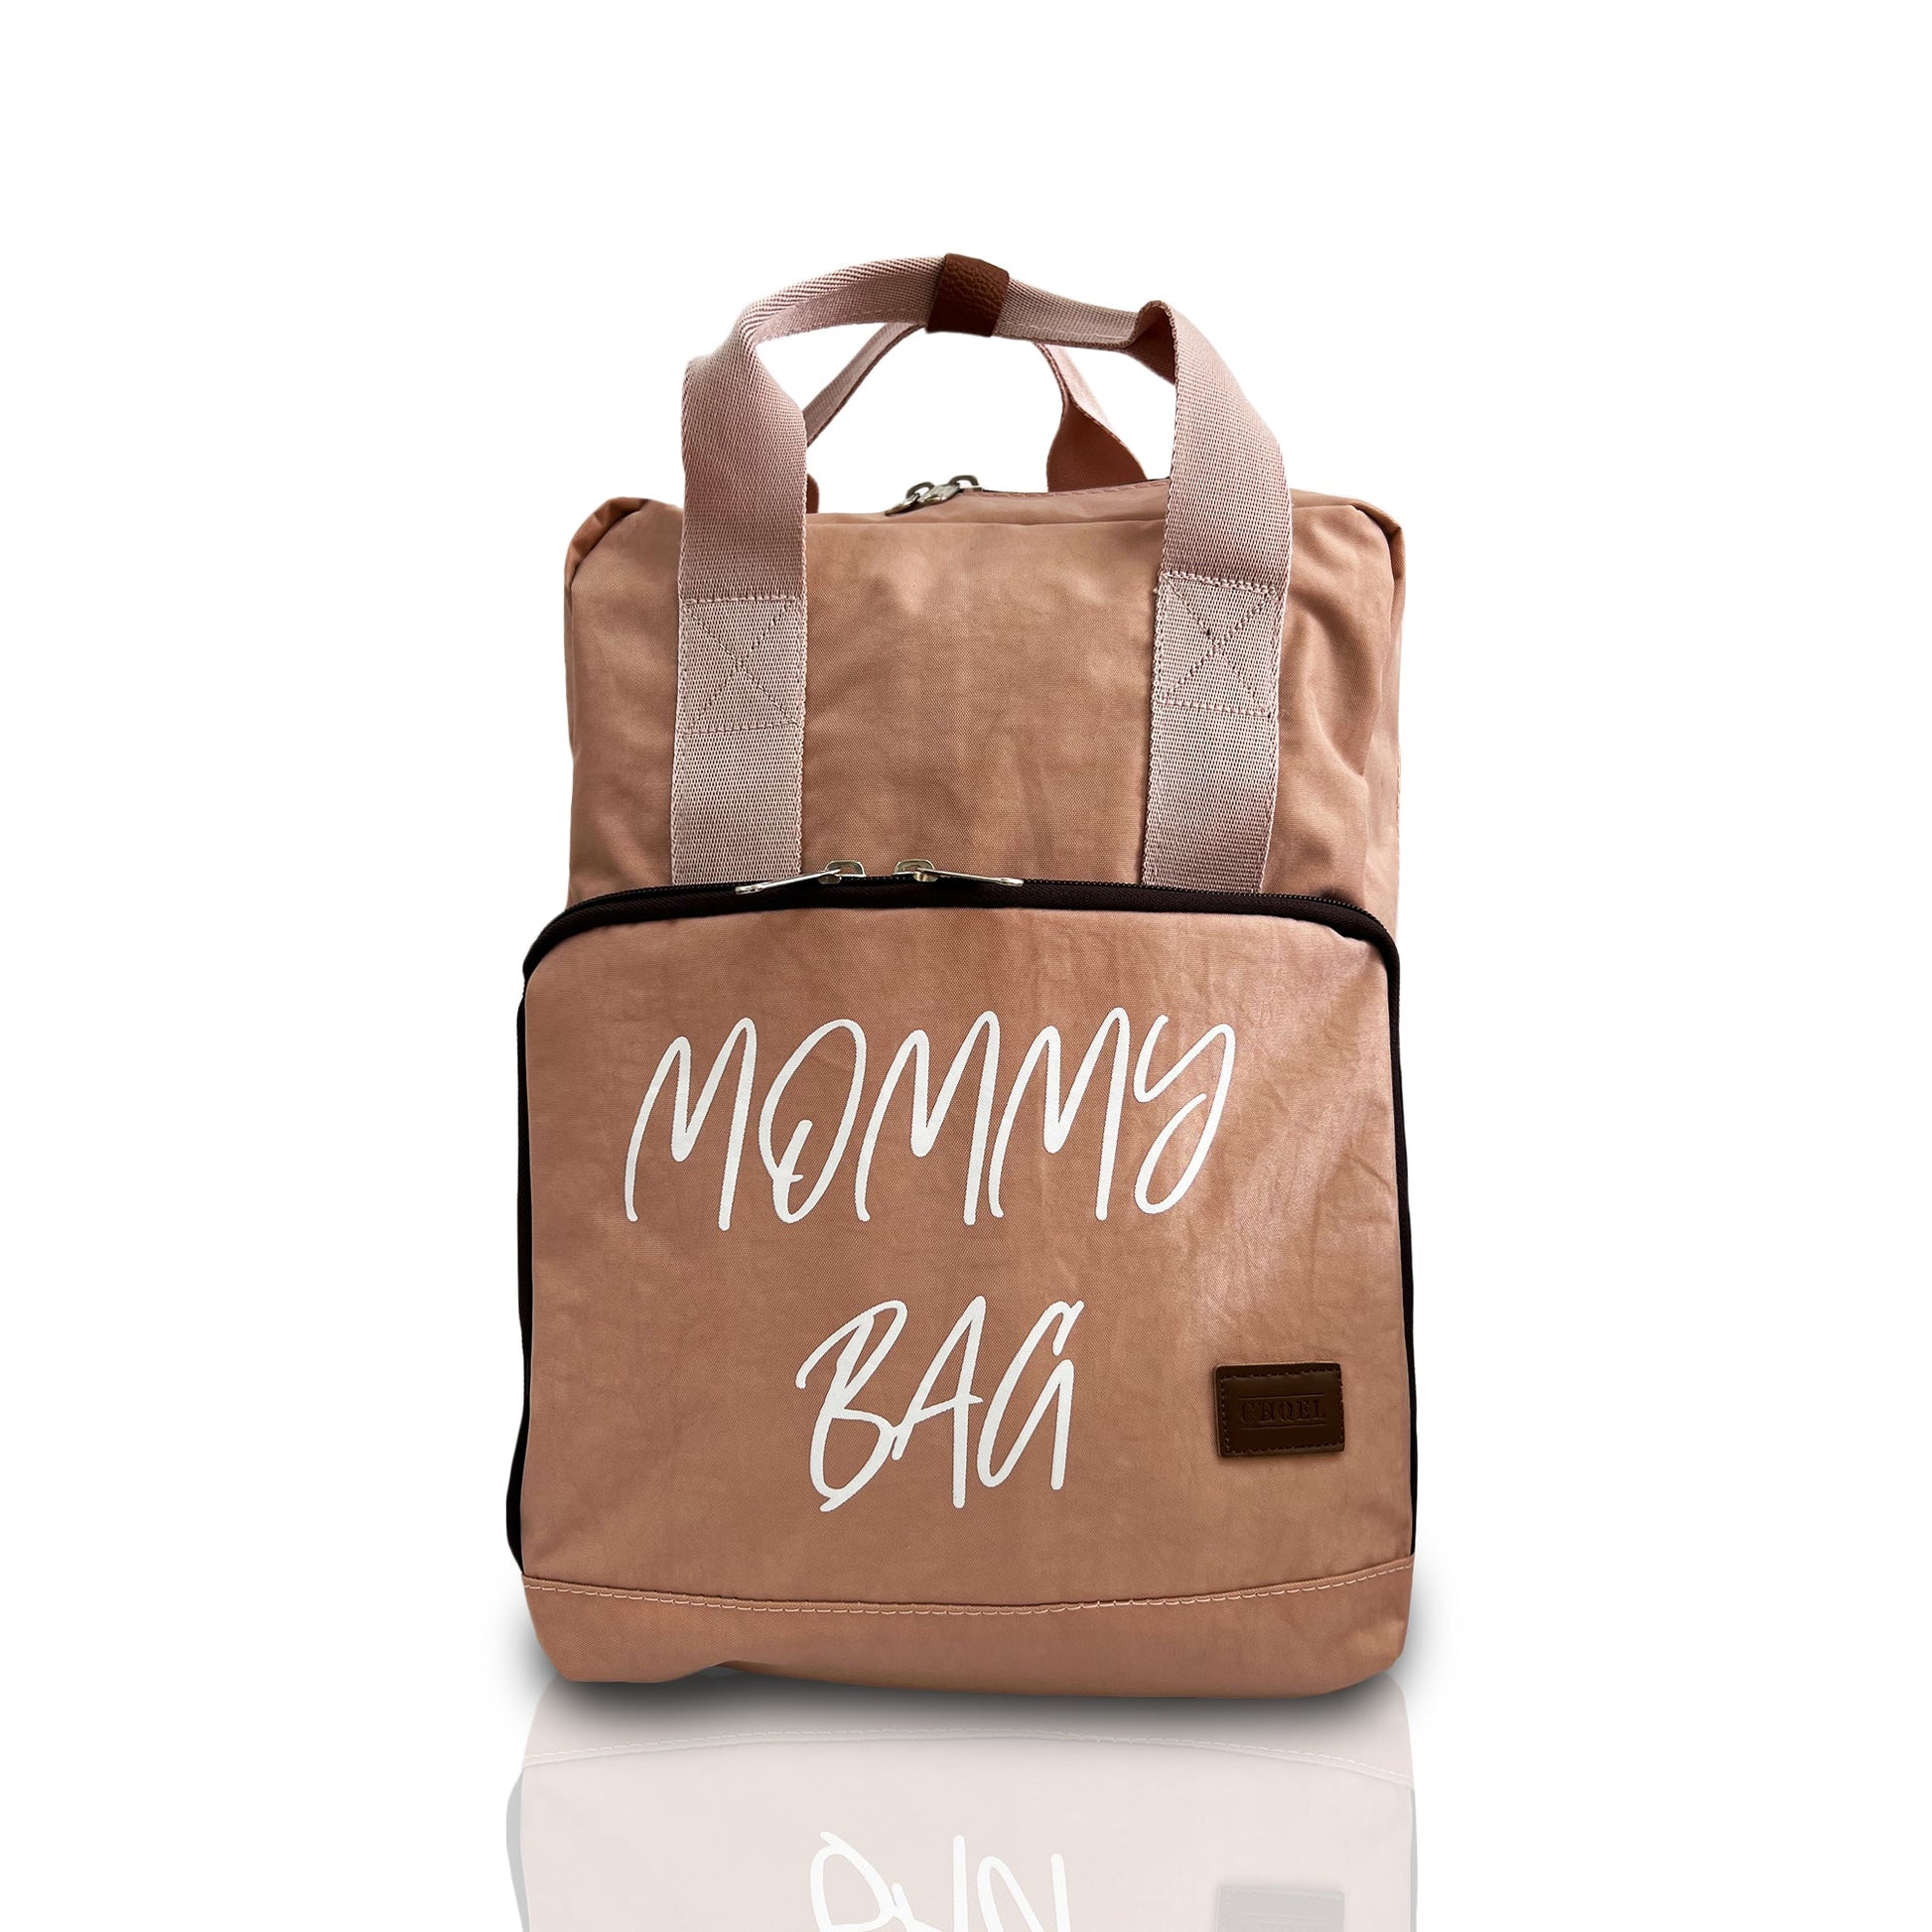 CHQEL Mommy Bag Backpack, Mommy Baby Care, Hospital, Maternity, Mommy Bag for Hospital, Travel Backpack with Thermal Compartment ürününün kopyası ürününün kopyası ürününün kopyası ürününün kopyası - CHQEL